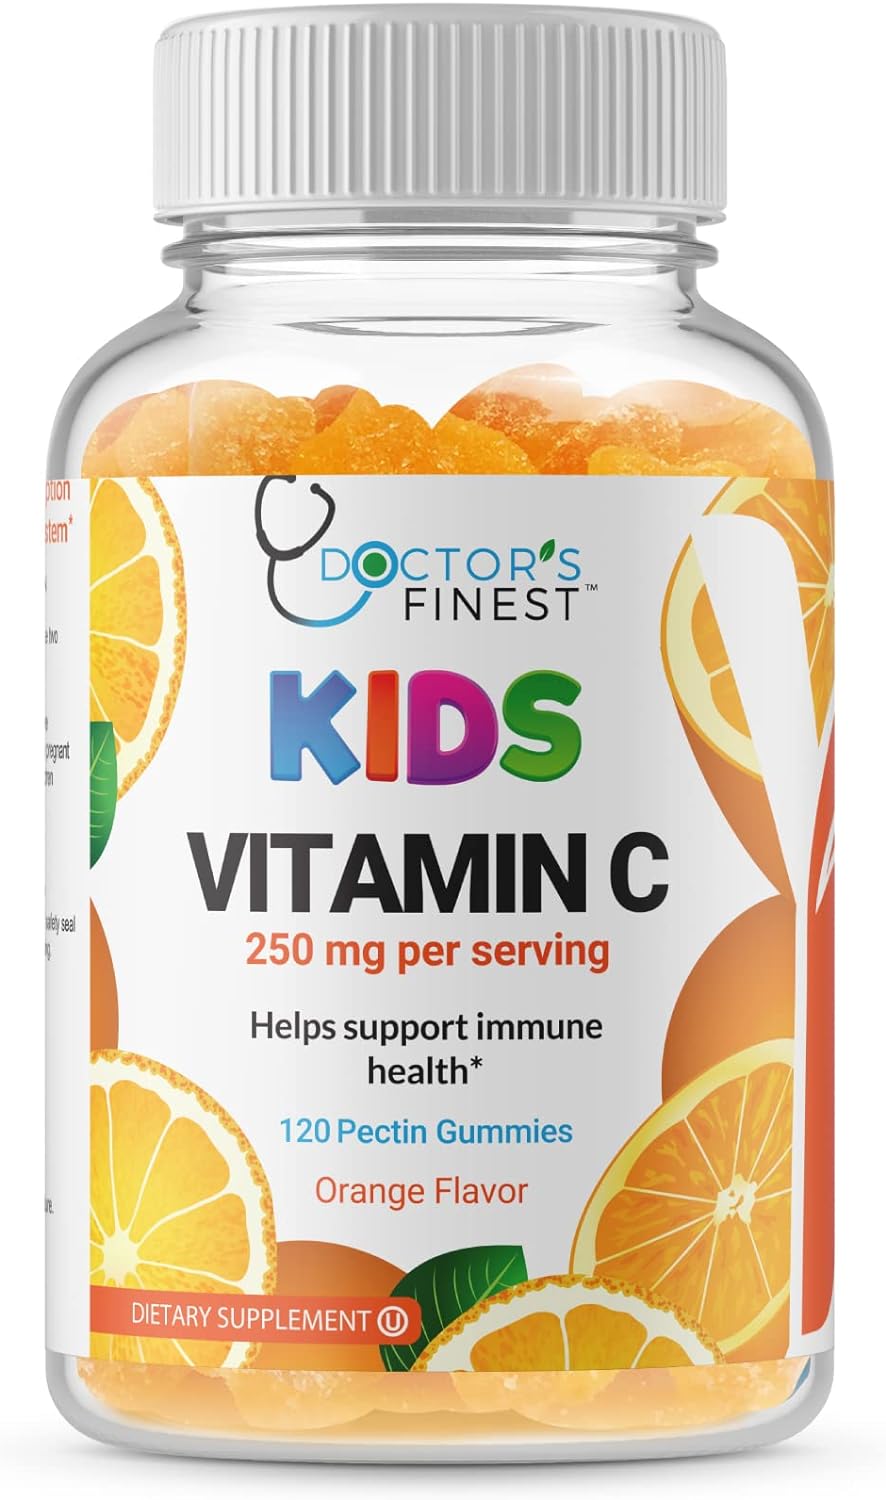 DOCTOR'S FINEST Vitamin C Gummies for Kids - Vegan, GMO Free & Gluten Free - Great Tasting Orange Flavor Pectin Chews - Kids Dietary Supplement - 250 mg of Vitamin C 60 Jellies [30 Doses]